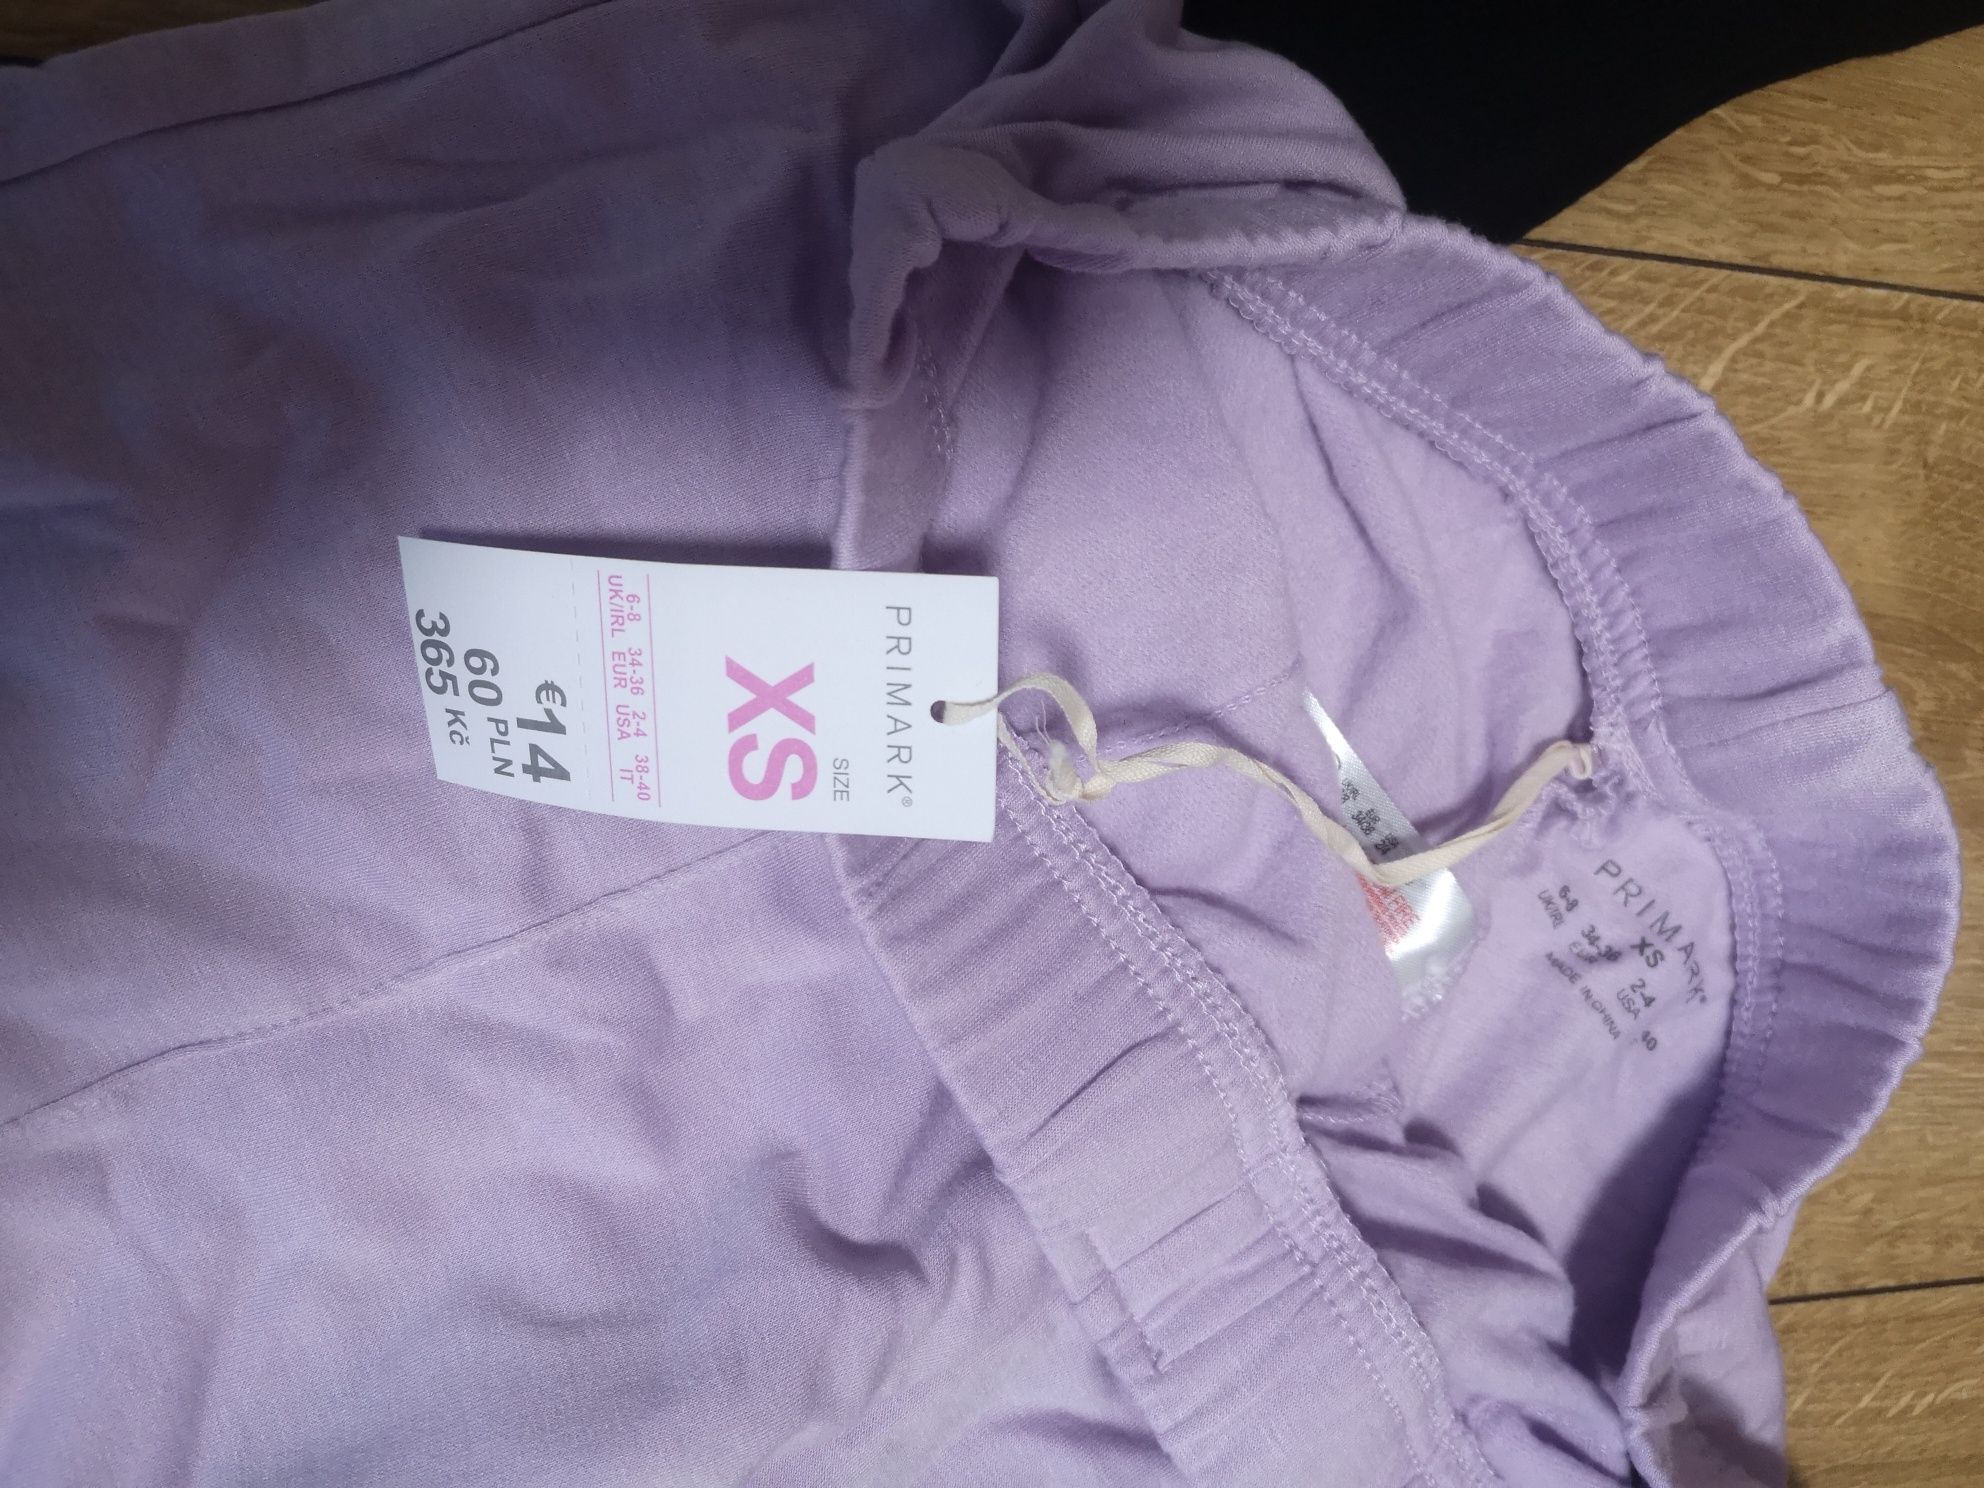 Piżama spodnie kuloty bokserka podkoszulka fioletowa primark S XS